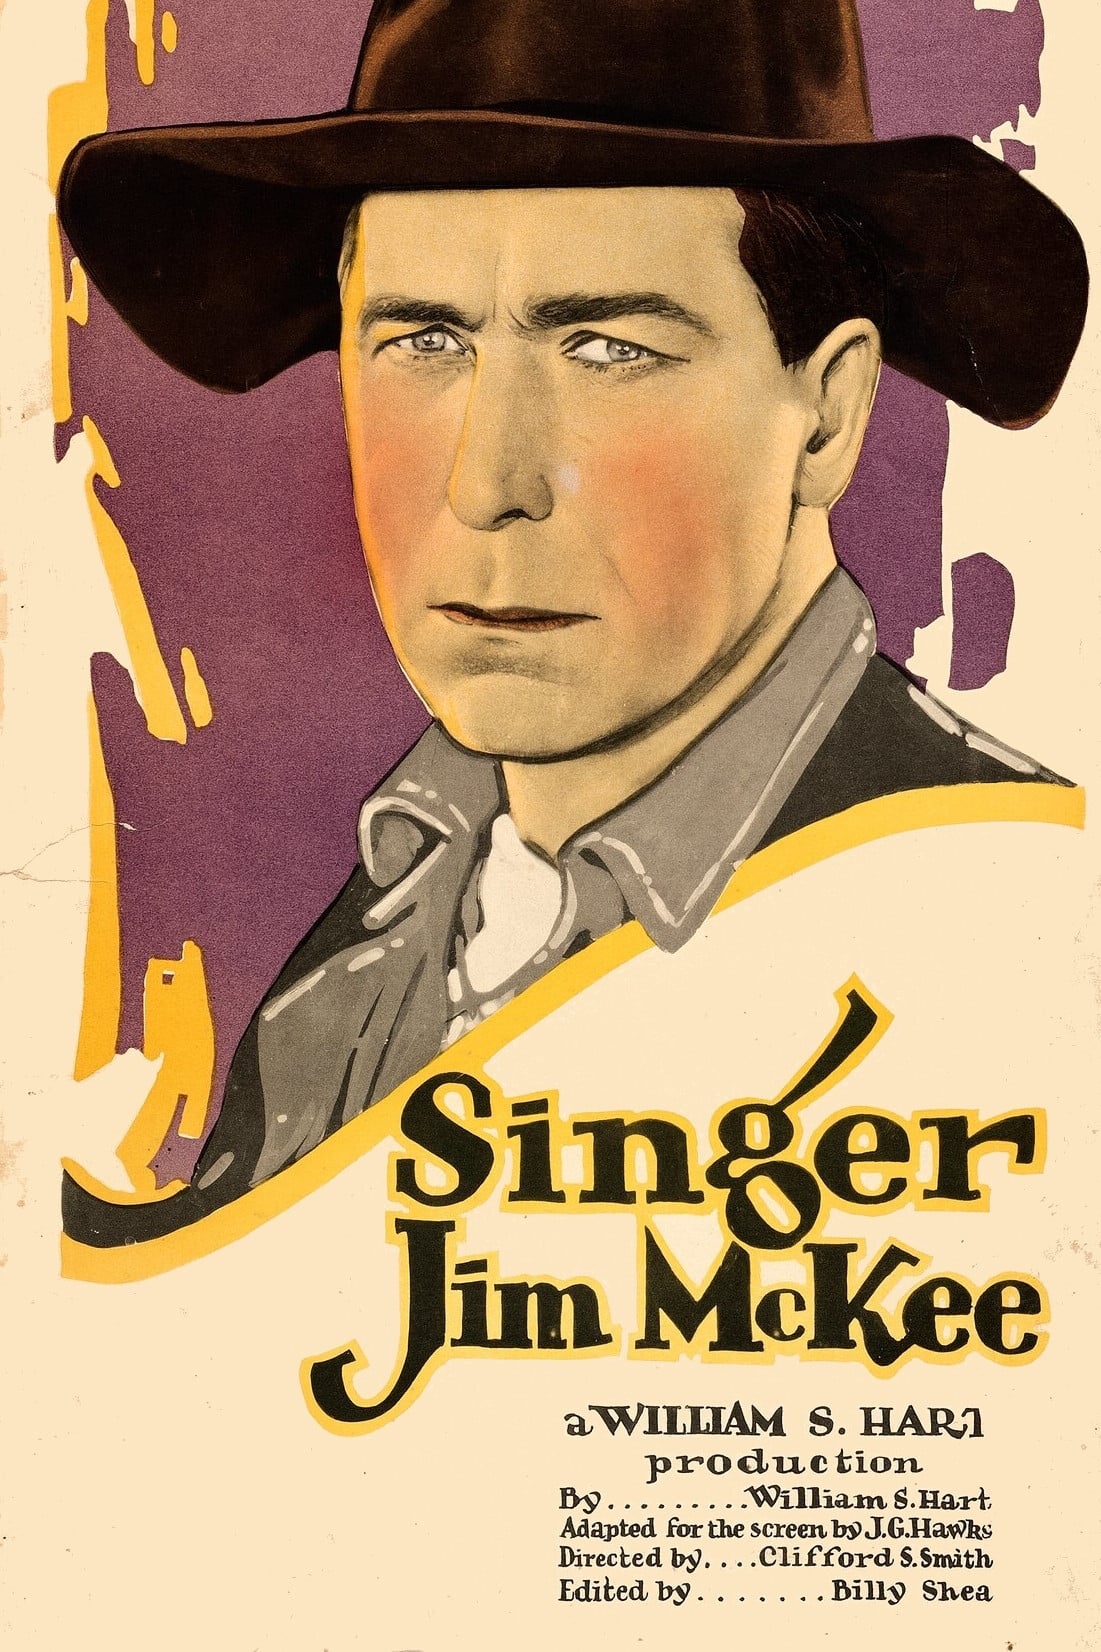 Singer Jim Mckee